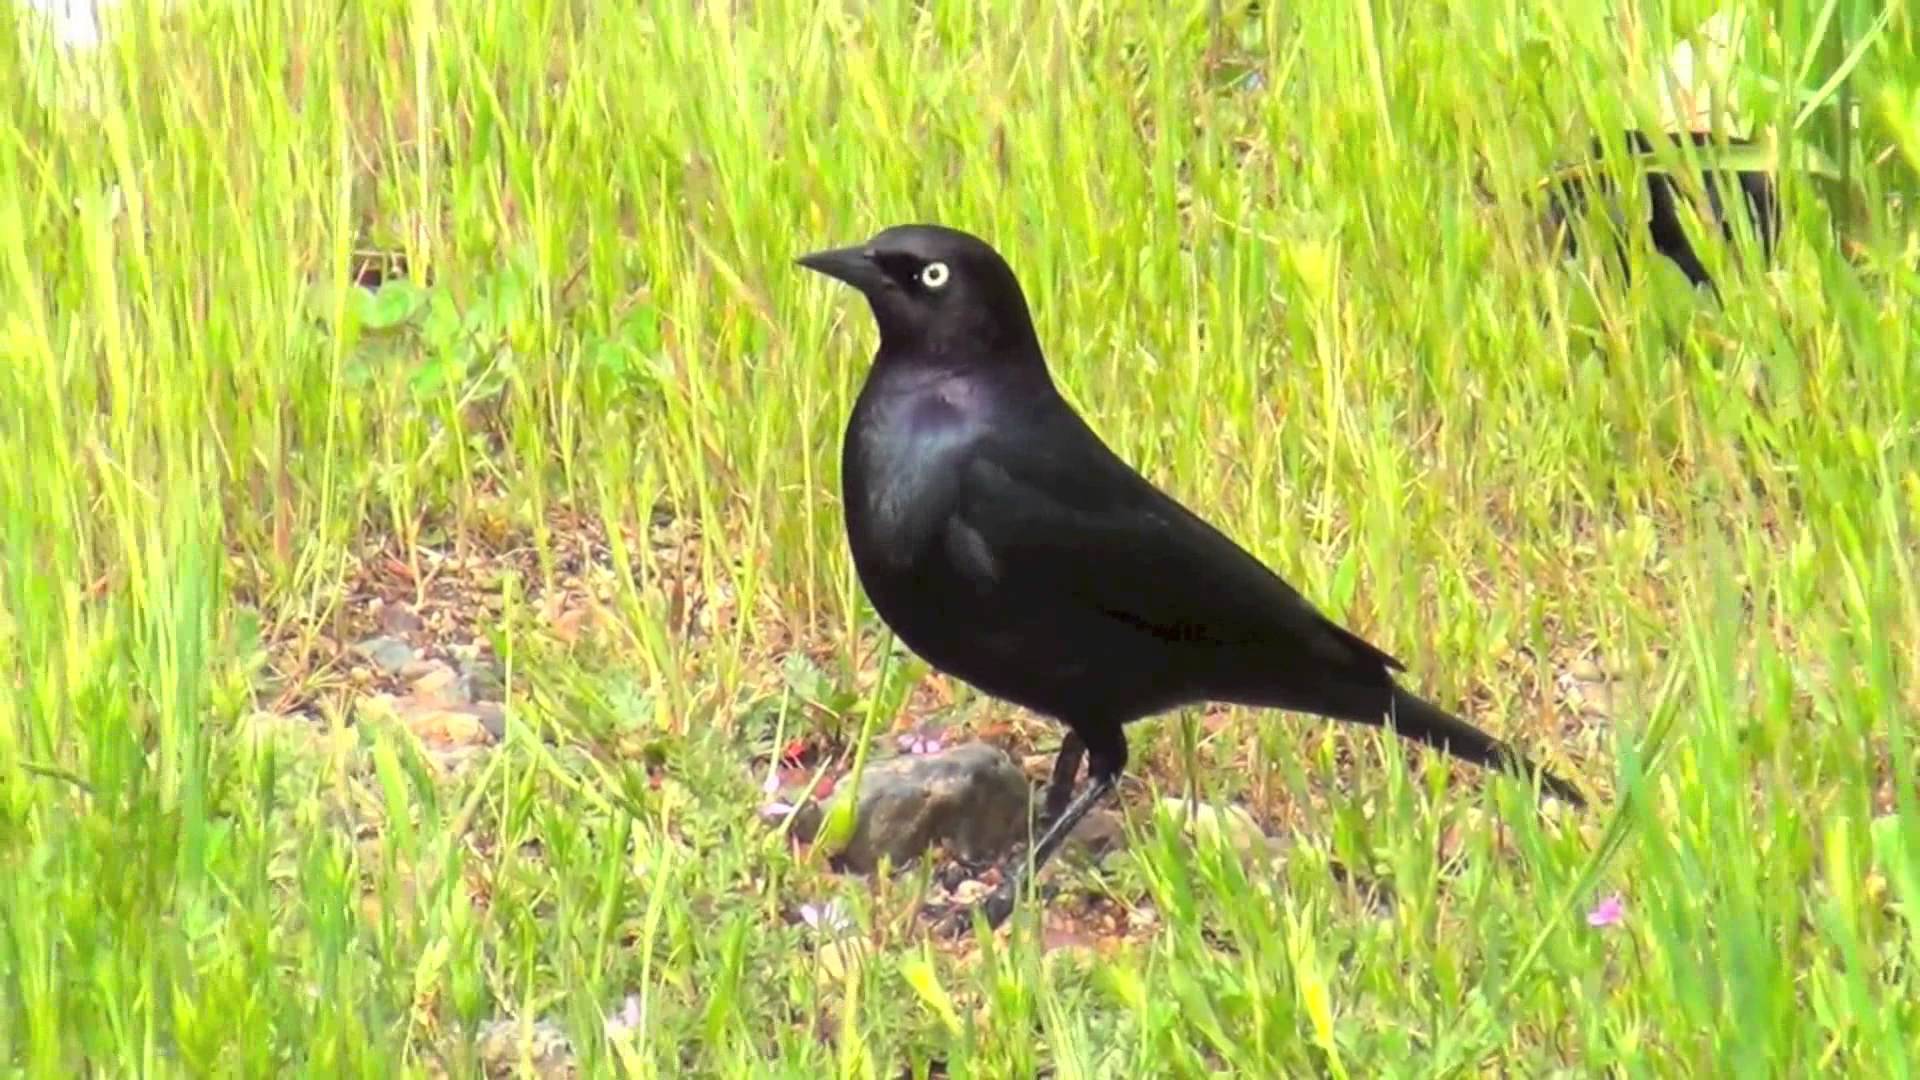 Wild Carrion Crow - Black Bird - YouTube